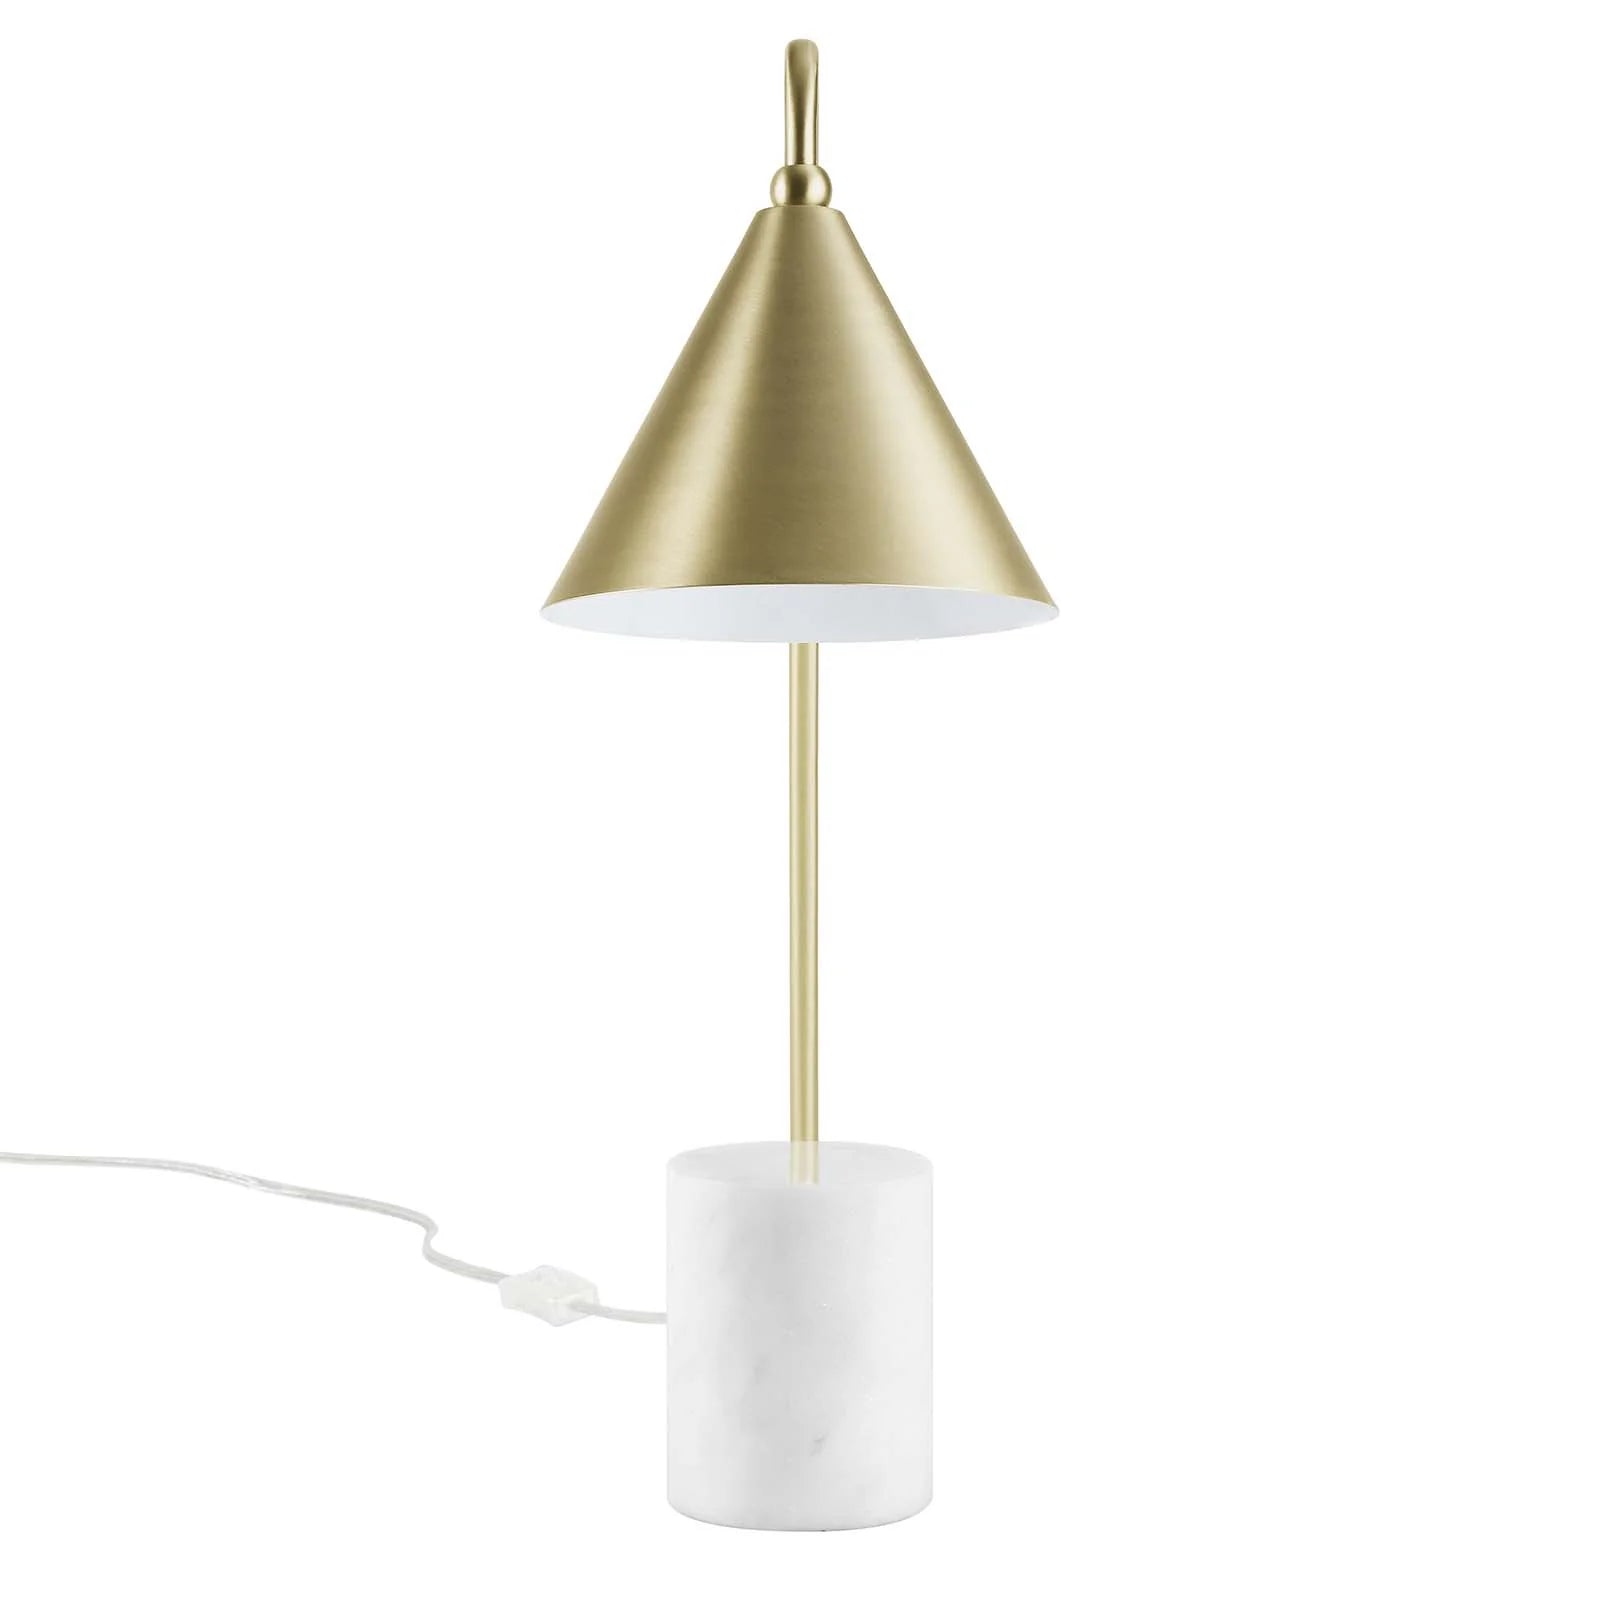 Lámpara de mesa color latón satinado con base de mármol blanco Irma de frente.